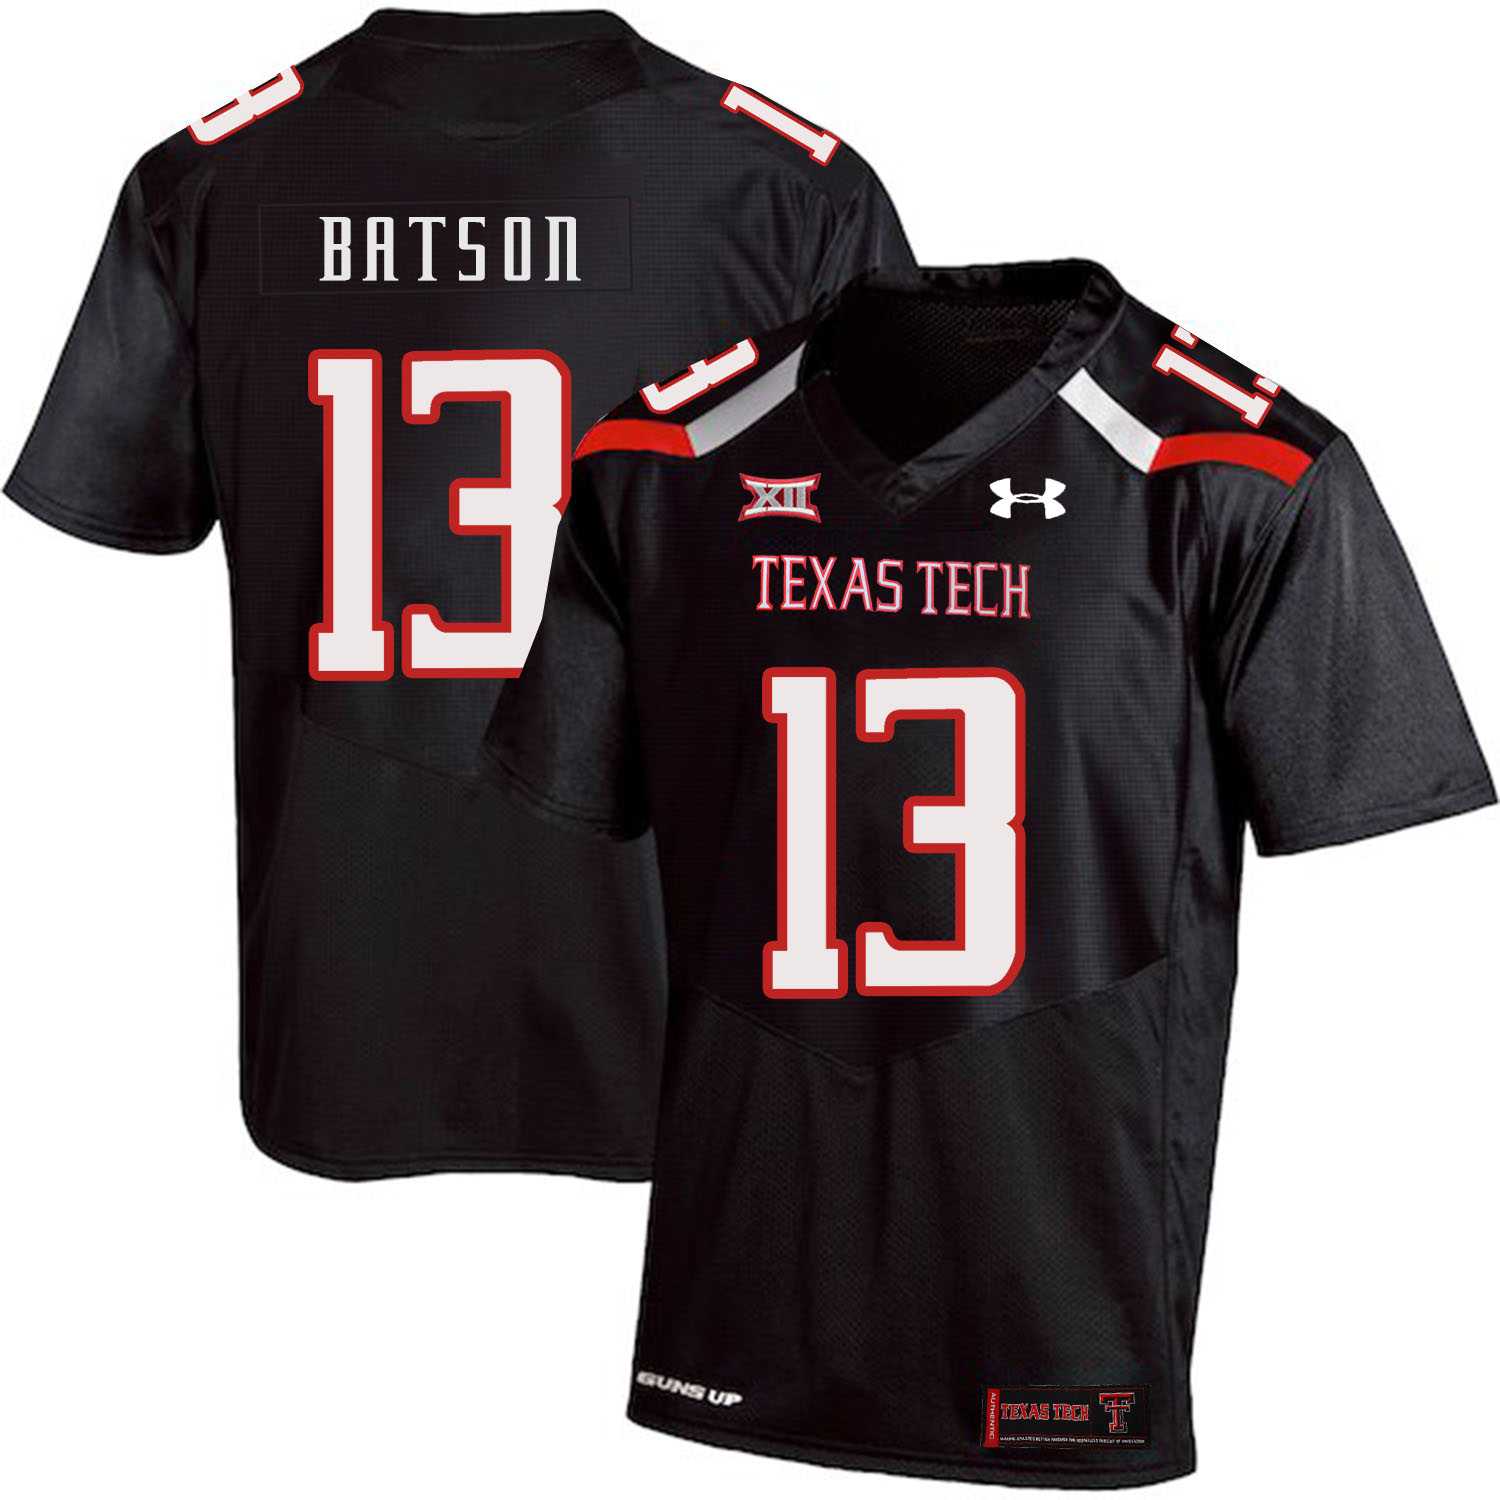 Texas Tech Red Raiders 13 Cameron Batson Black College Football Jersey Dzhi